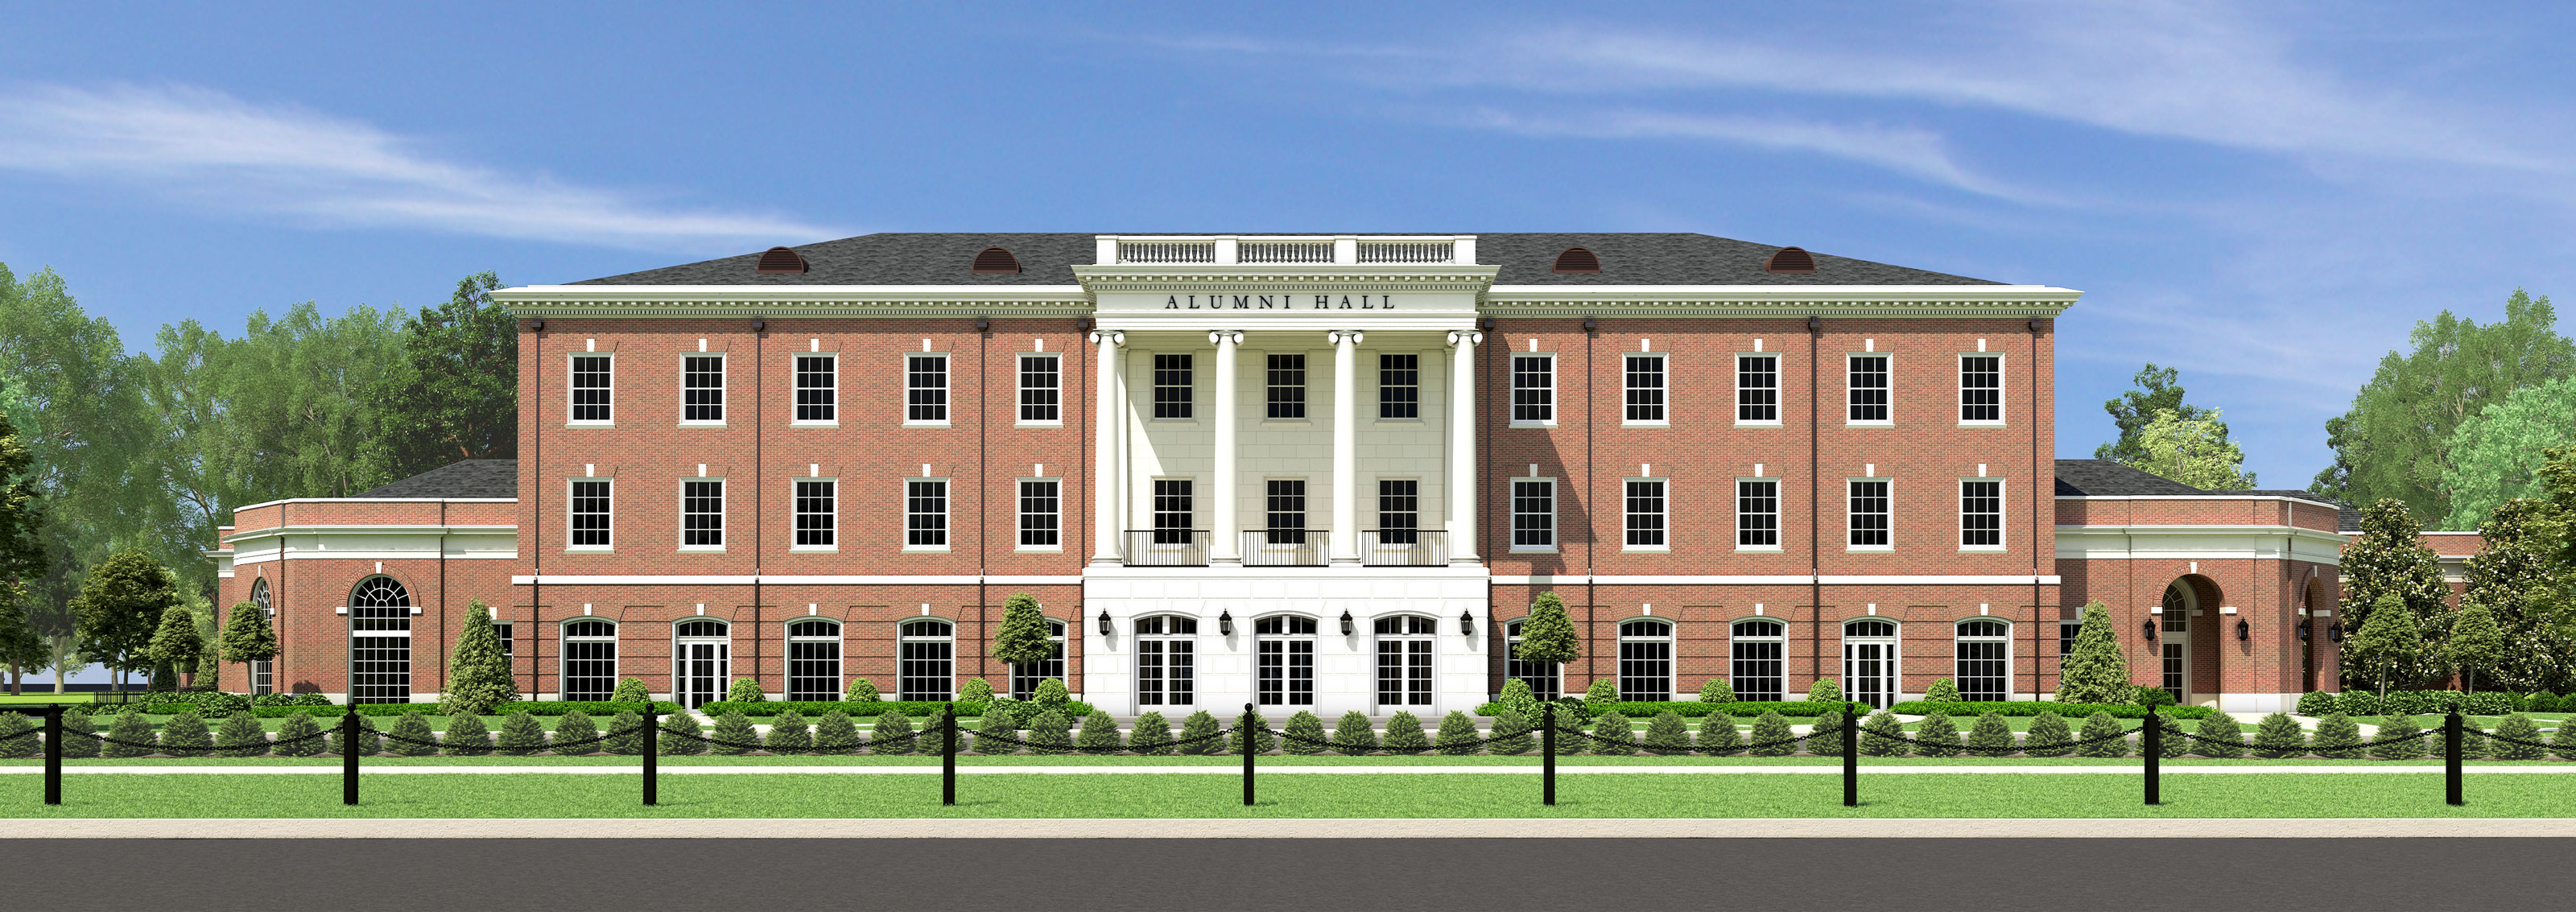 Alumni Hall rendering